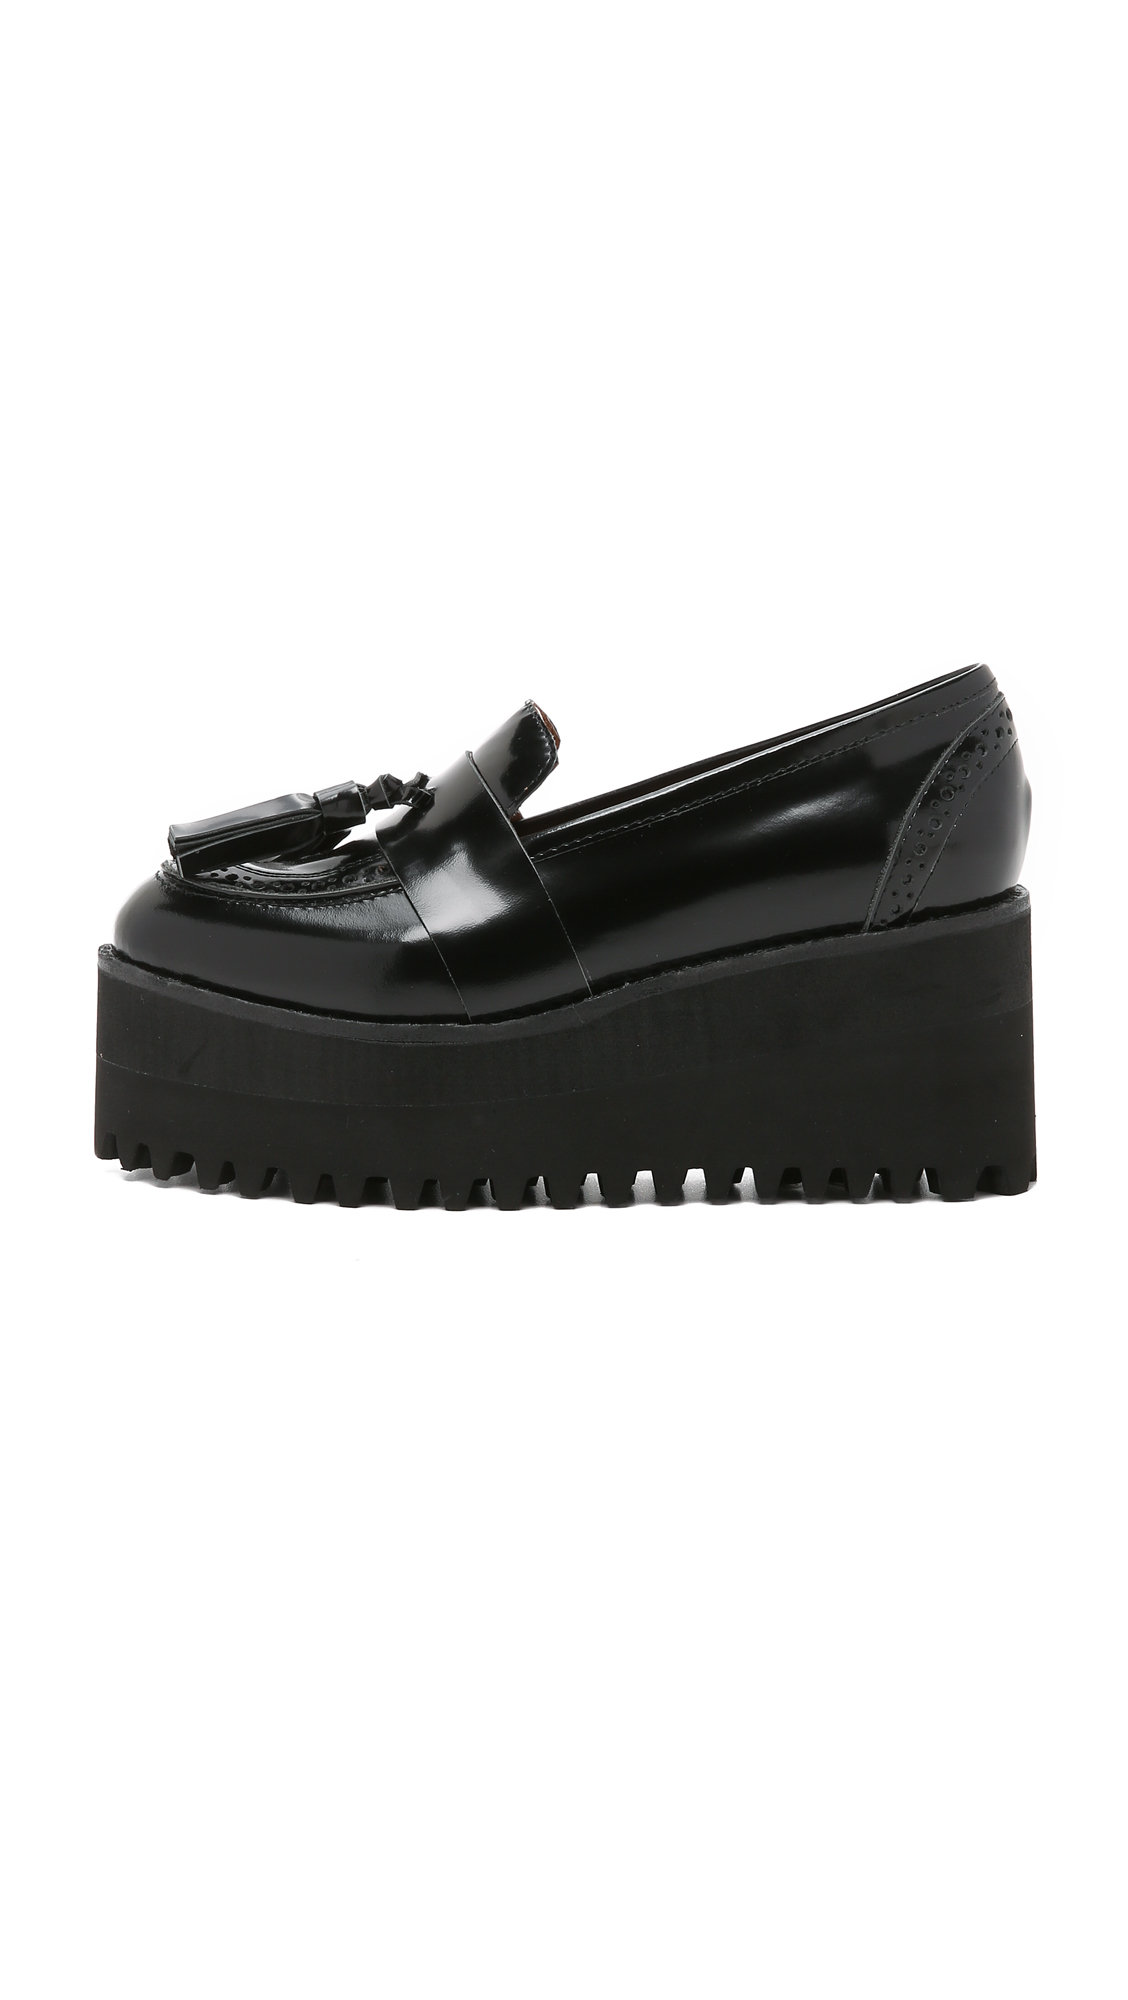 Lyst - Jeffrey Campbell Rogan Platform Loafers in Black